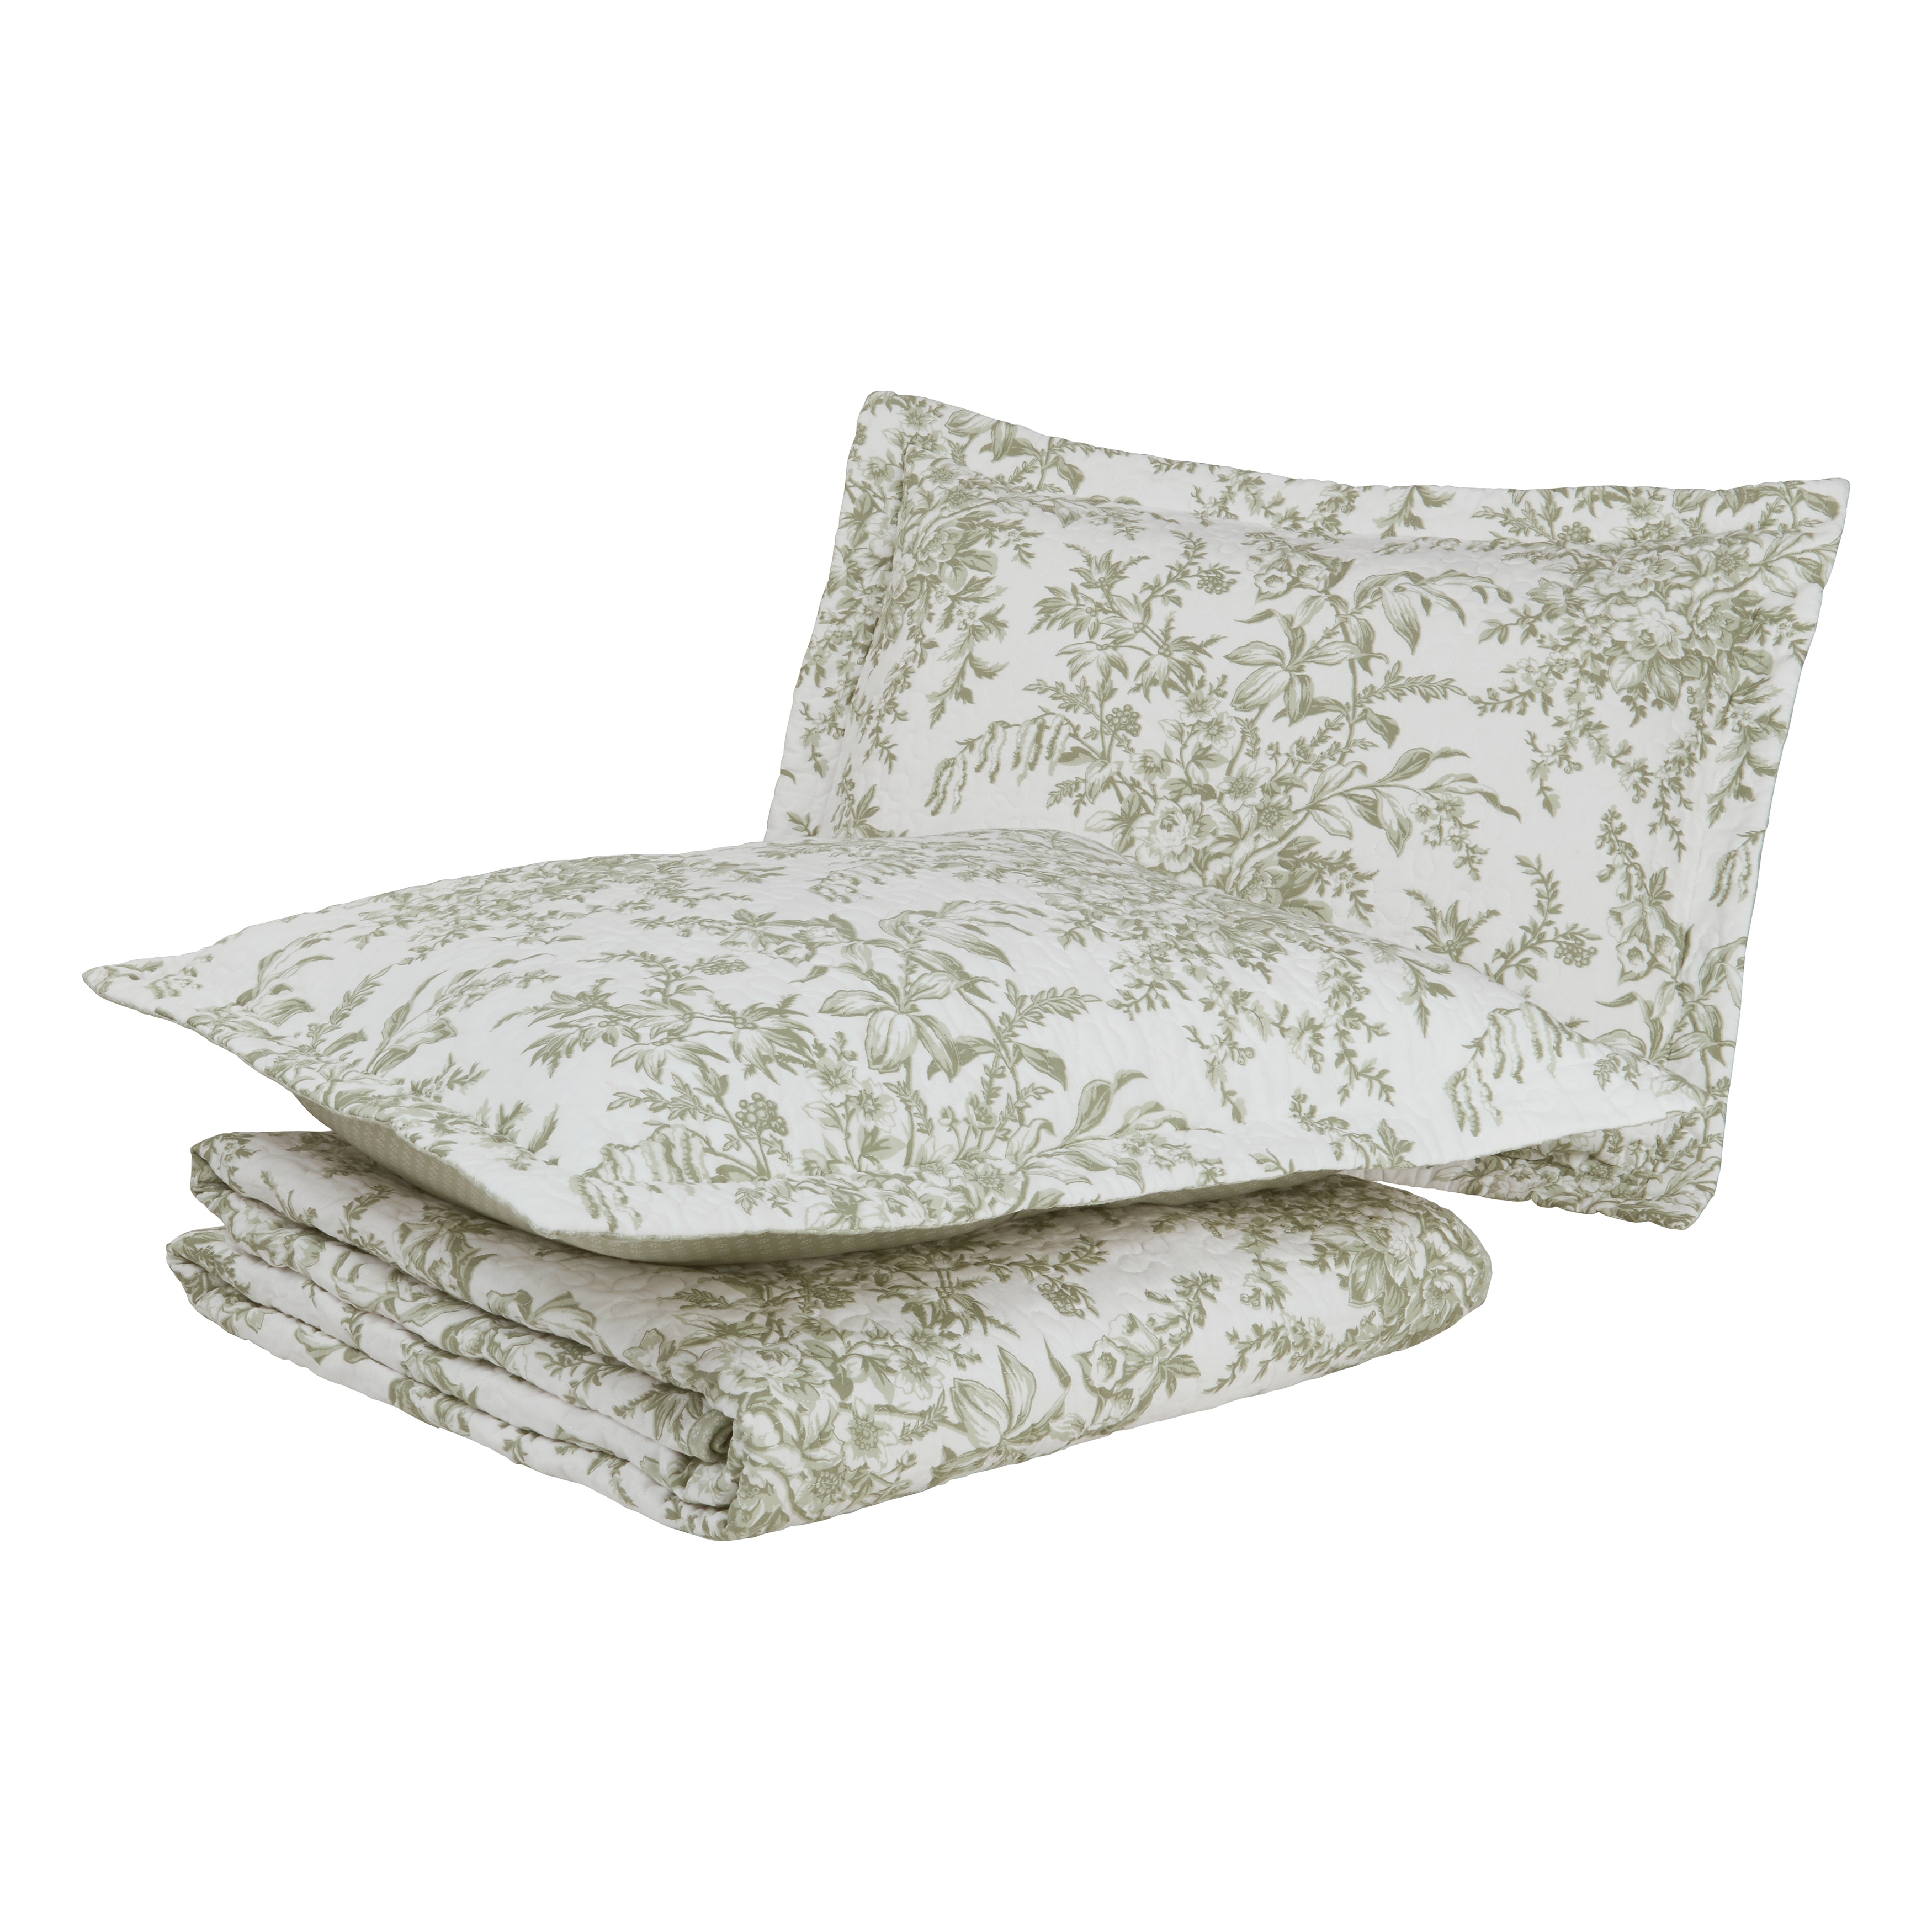 Laura Ashley Bedford Cotton Reversible Quilt Set - On Sale - Bed Bath &  Beyond - 8377822